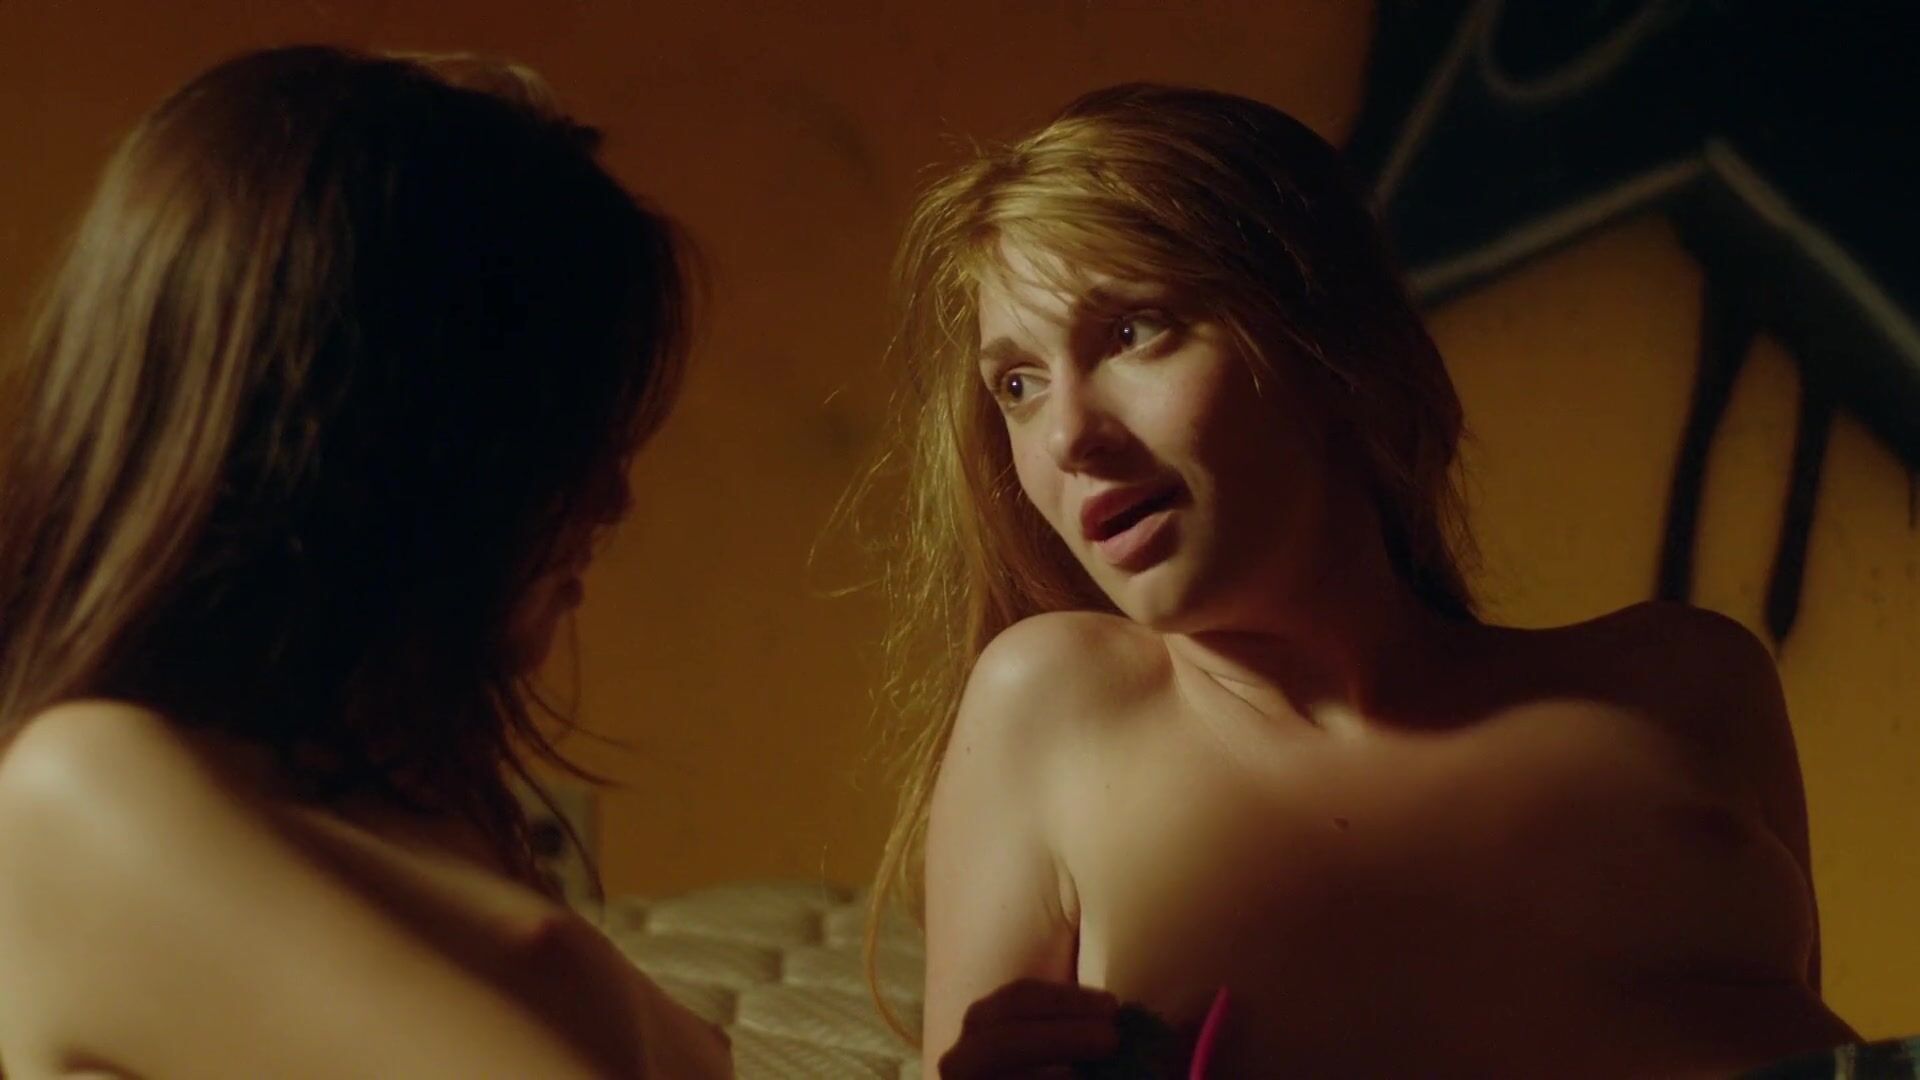 Amateurs Hot same-sex lovers Asta Paredes nude and Catherine Corcoran nude in lesbian sex scene Deepthroat - 1